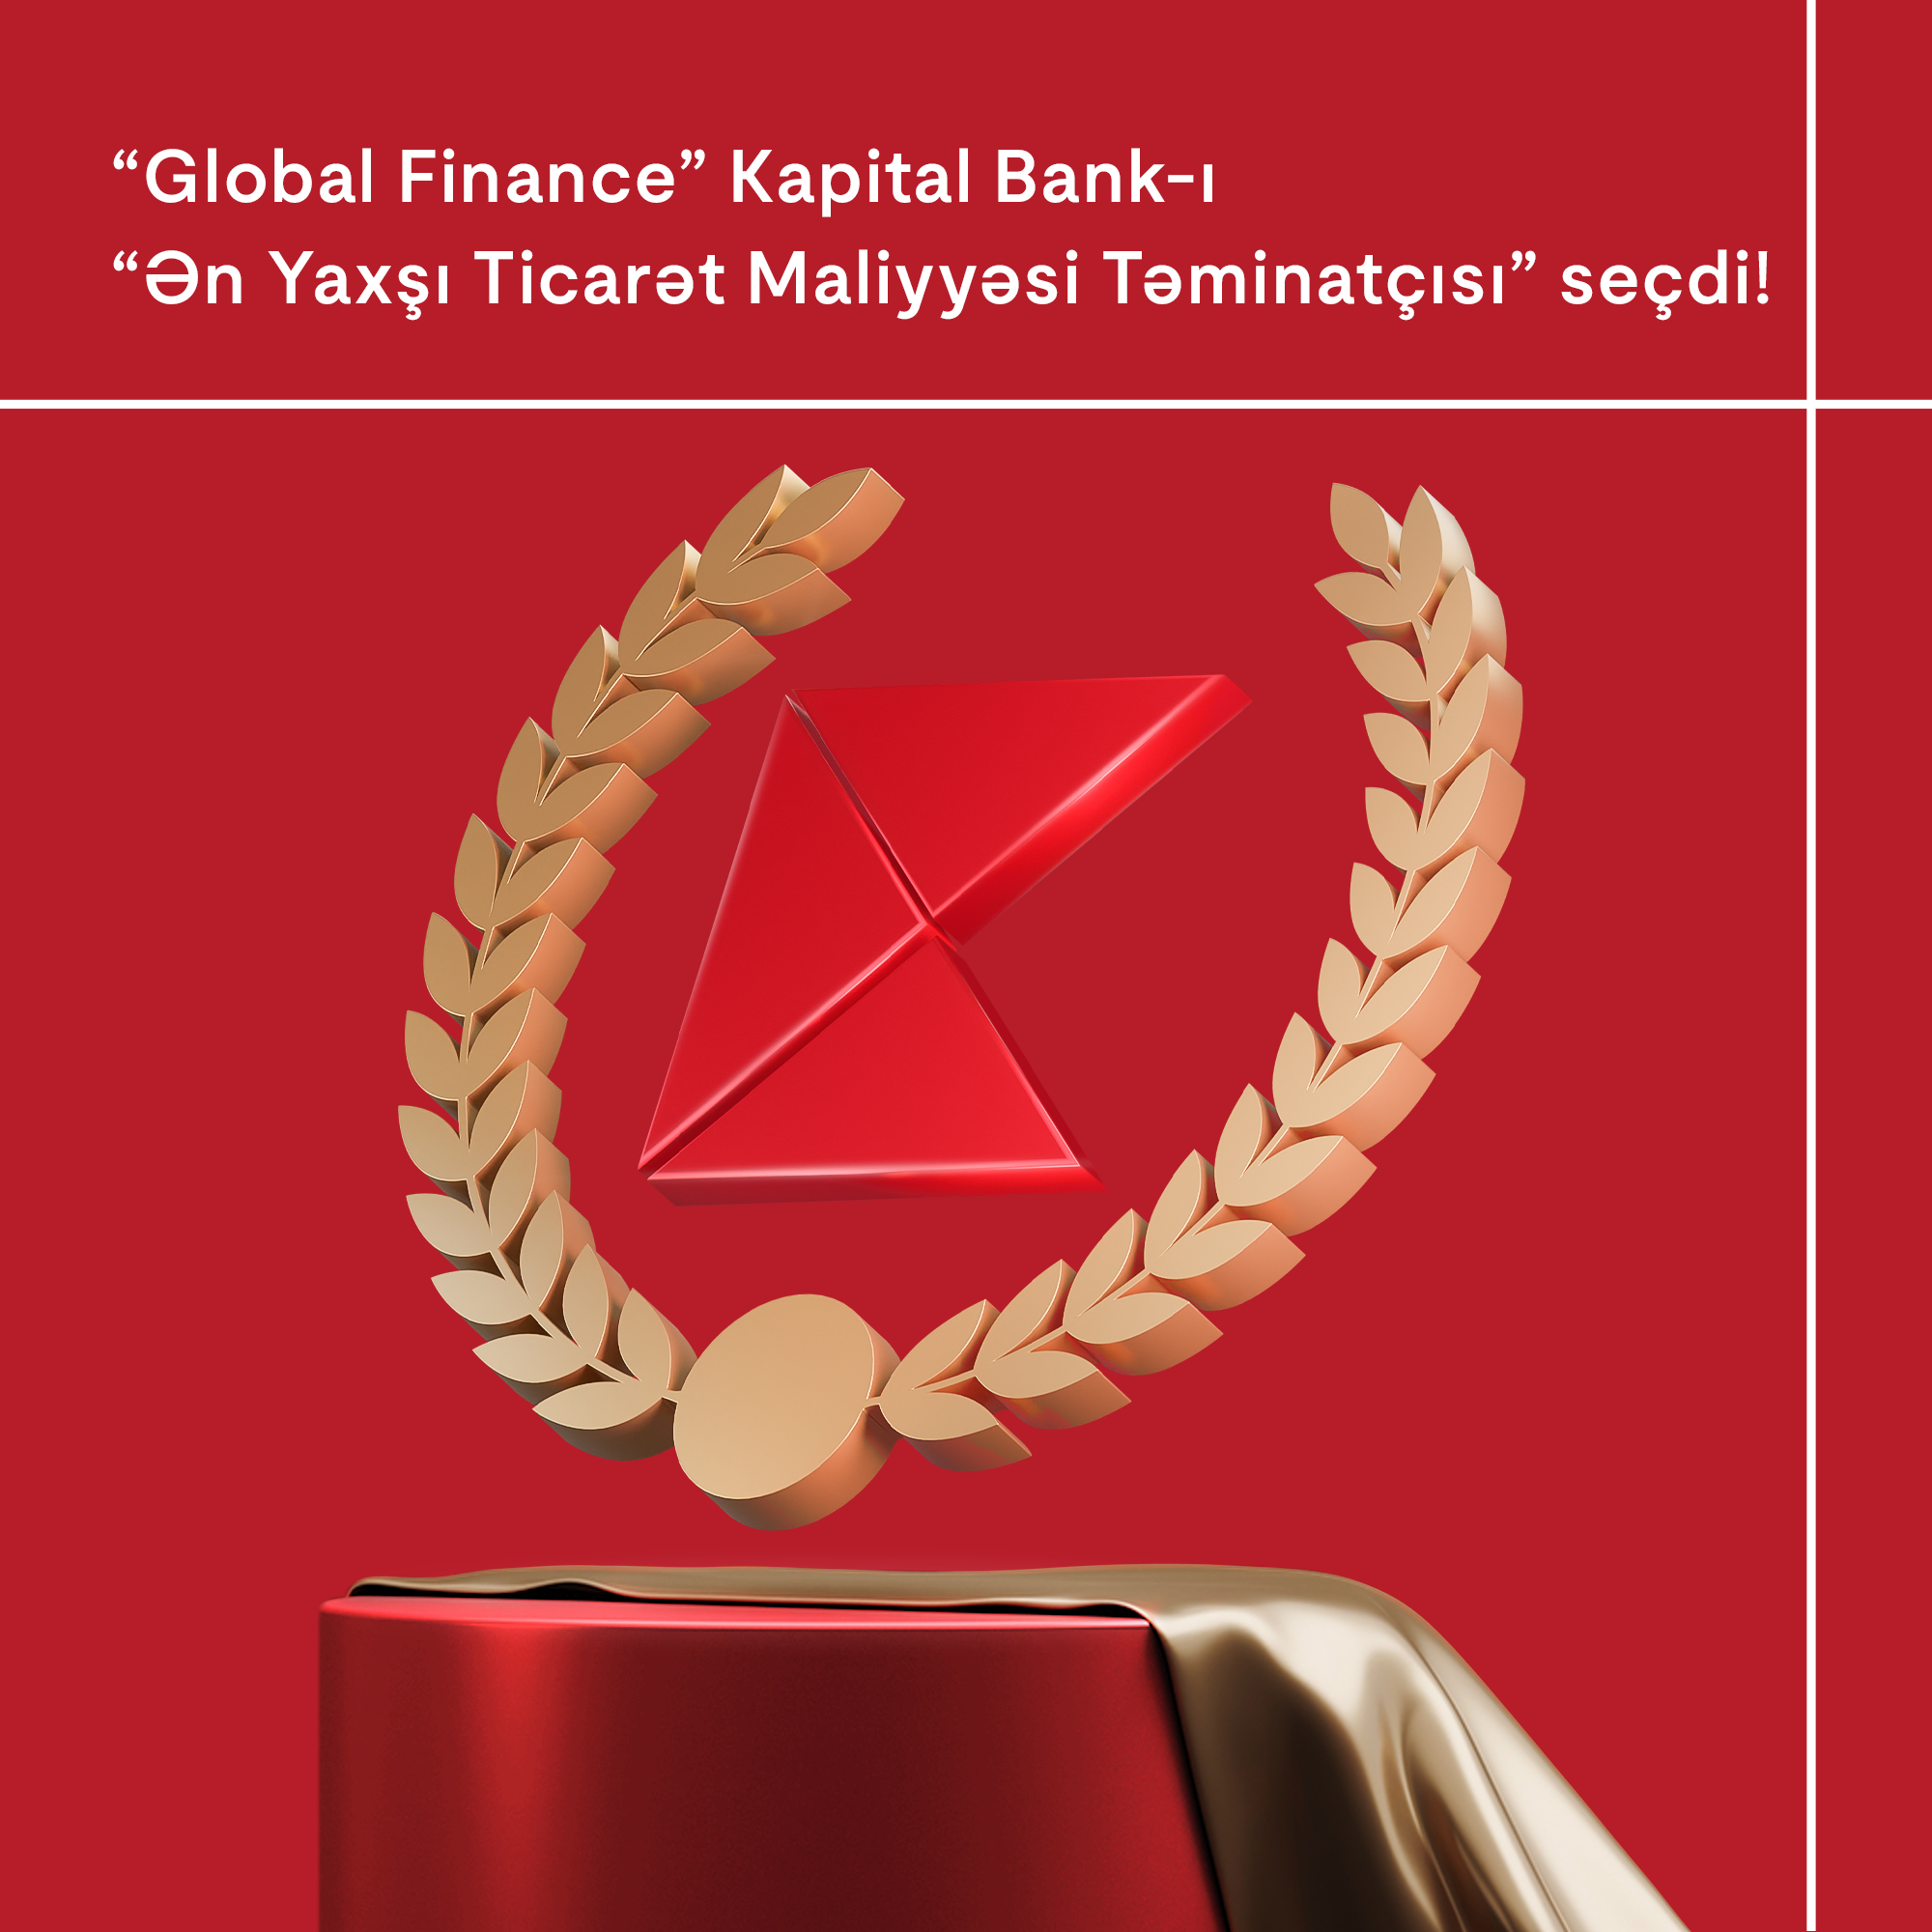 Kapital Bank is awarded by Global Finance